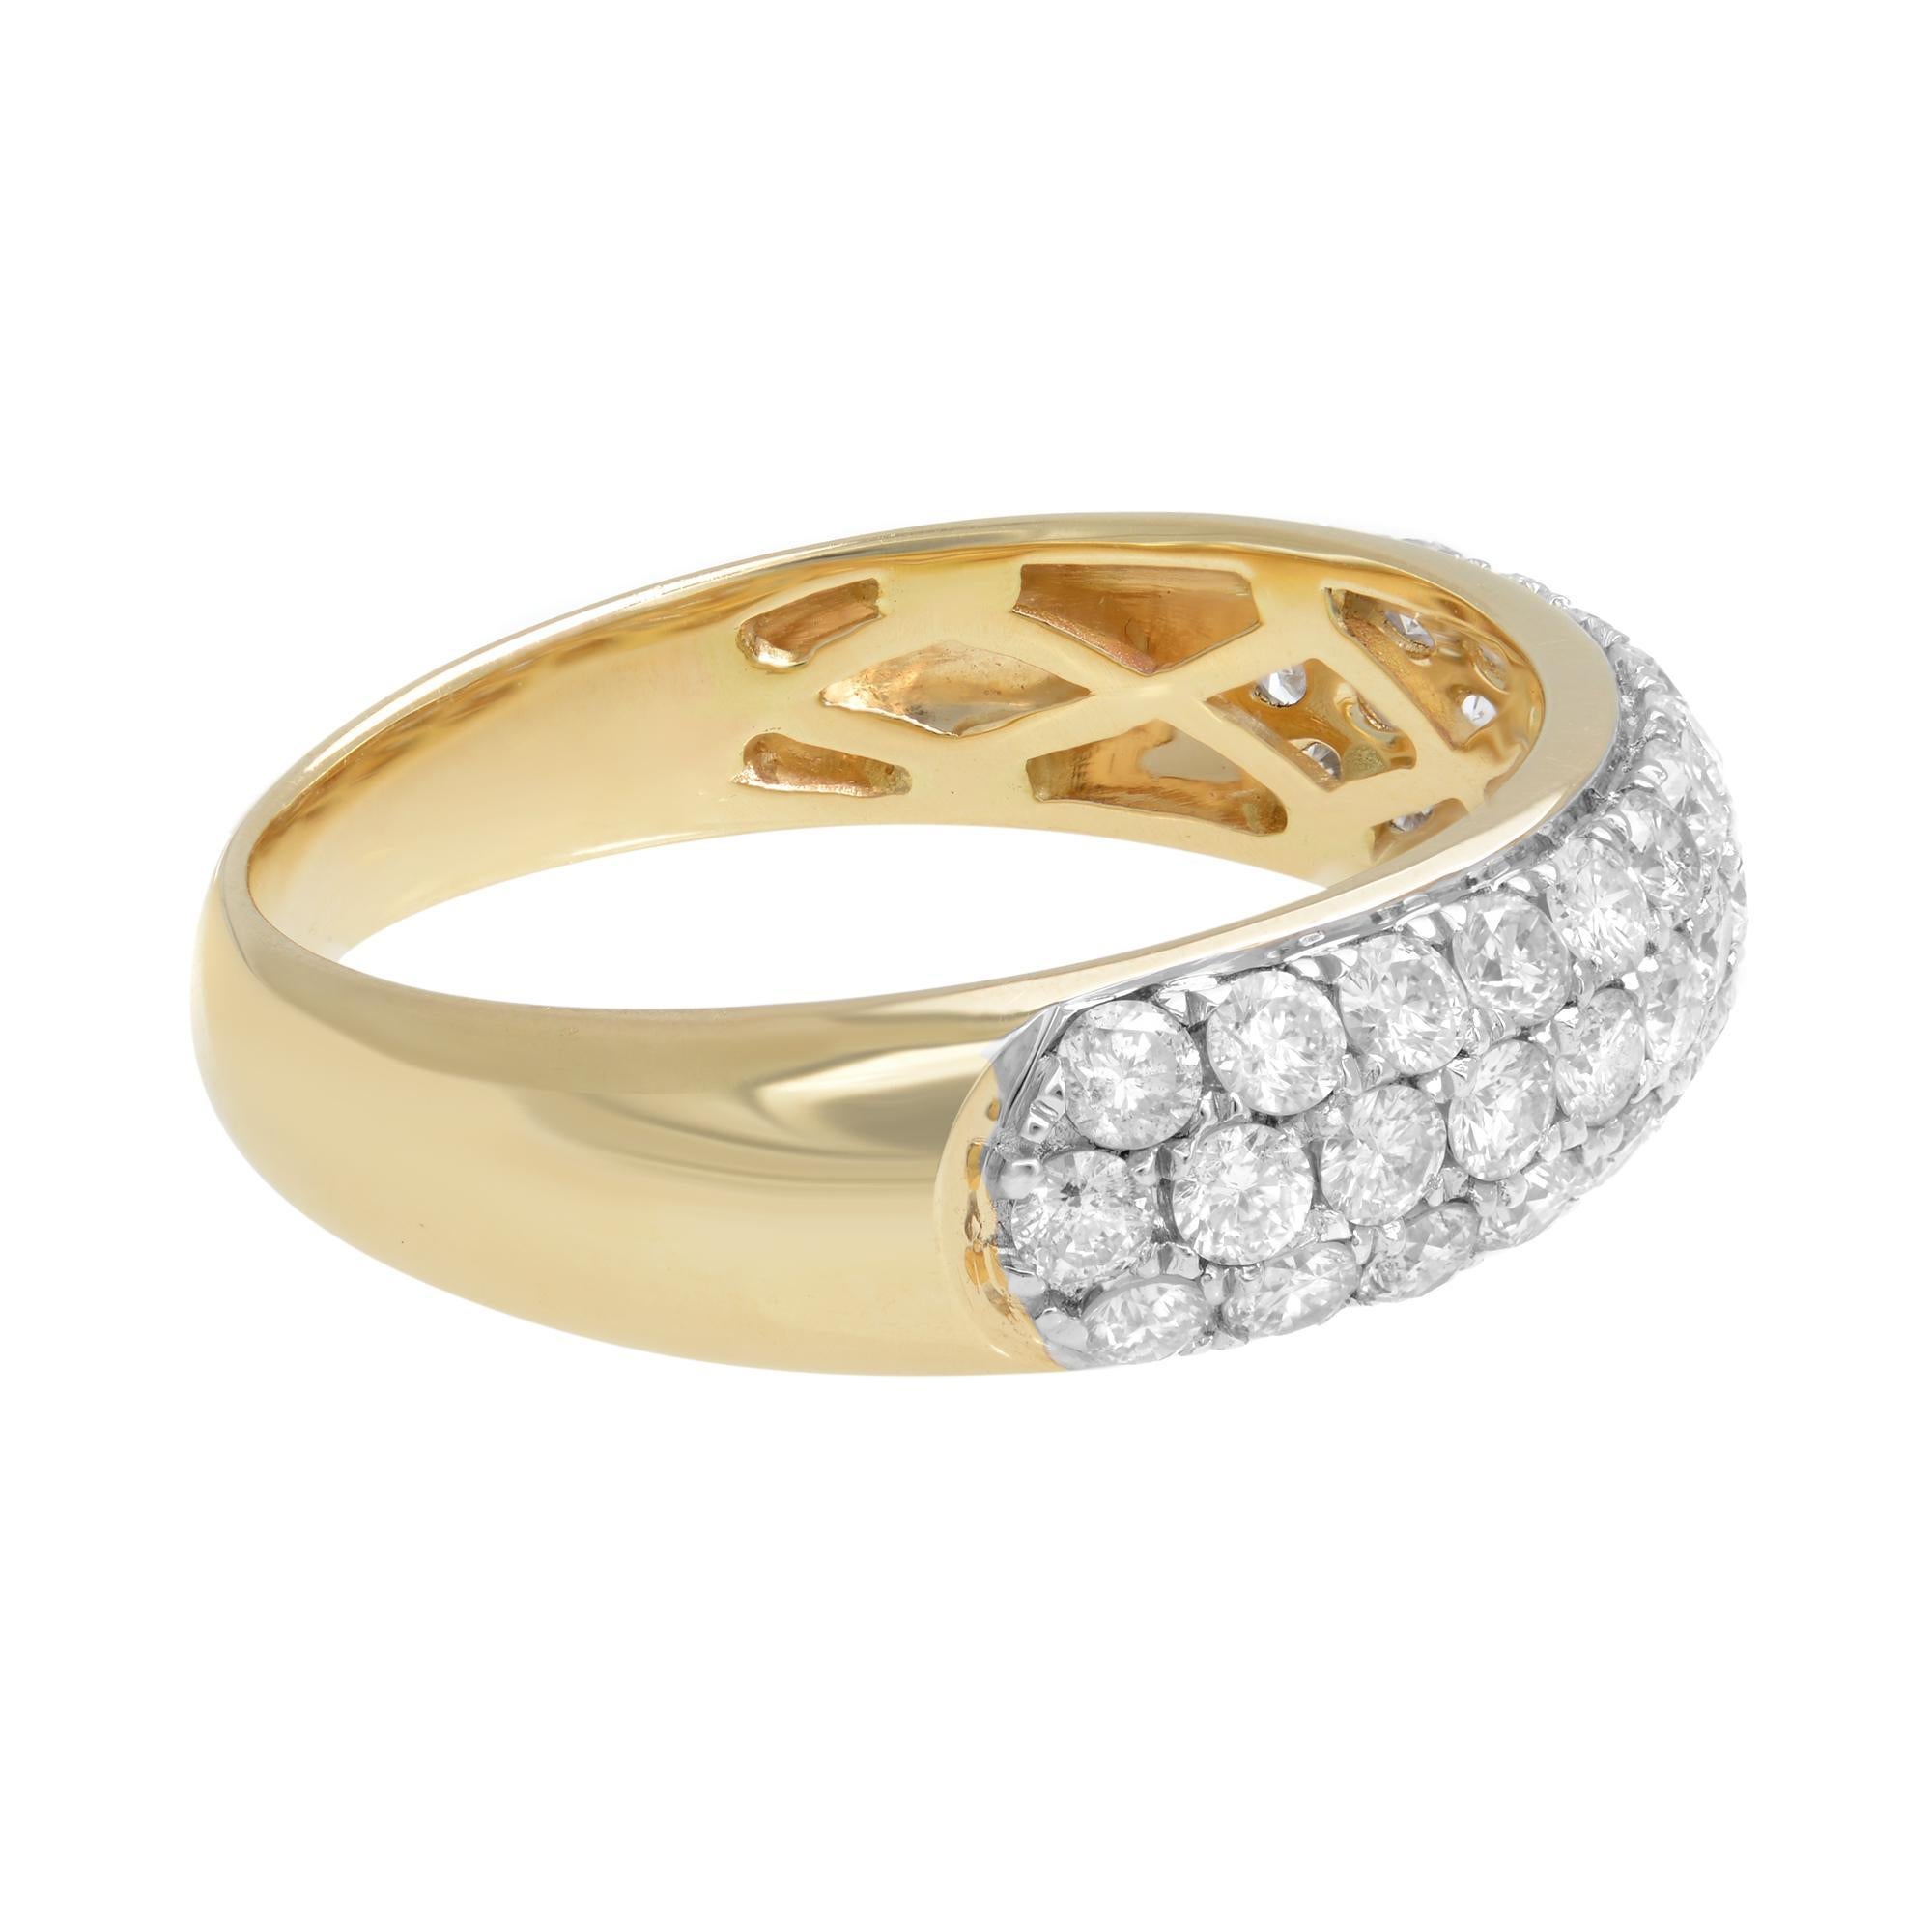 Round Cut Rachel Koen Three Row Pave Diamond Wedding Band Ring 14K Yellow Gold 1.04cttw For Sale